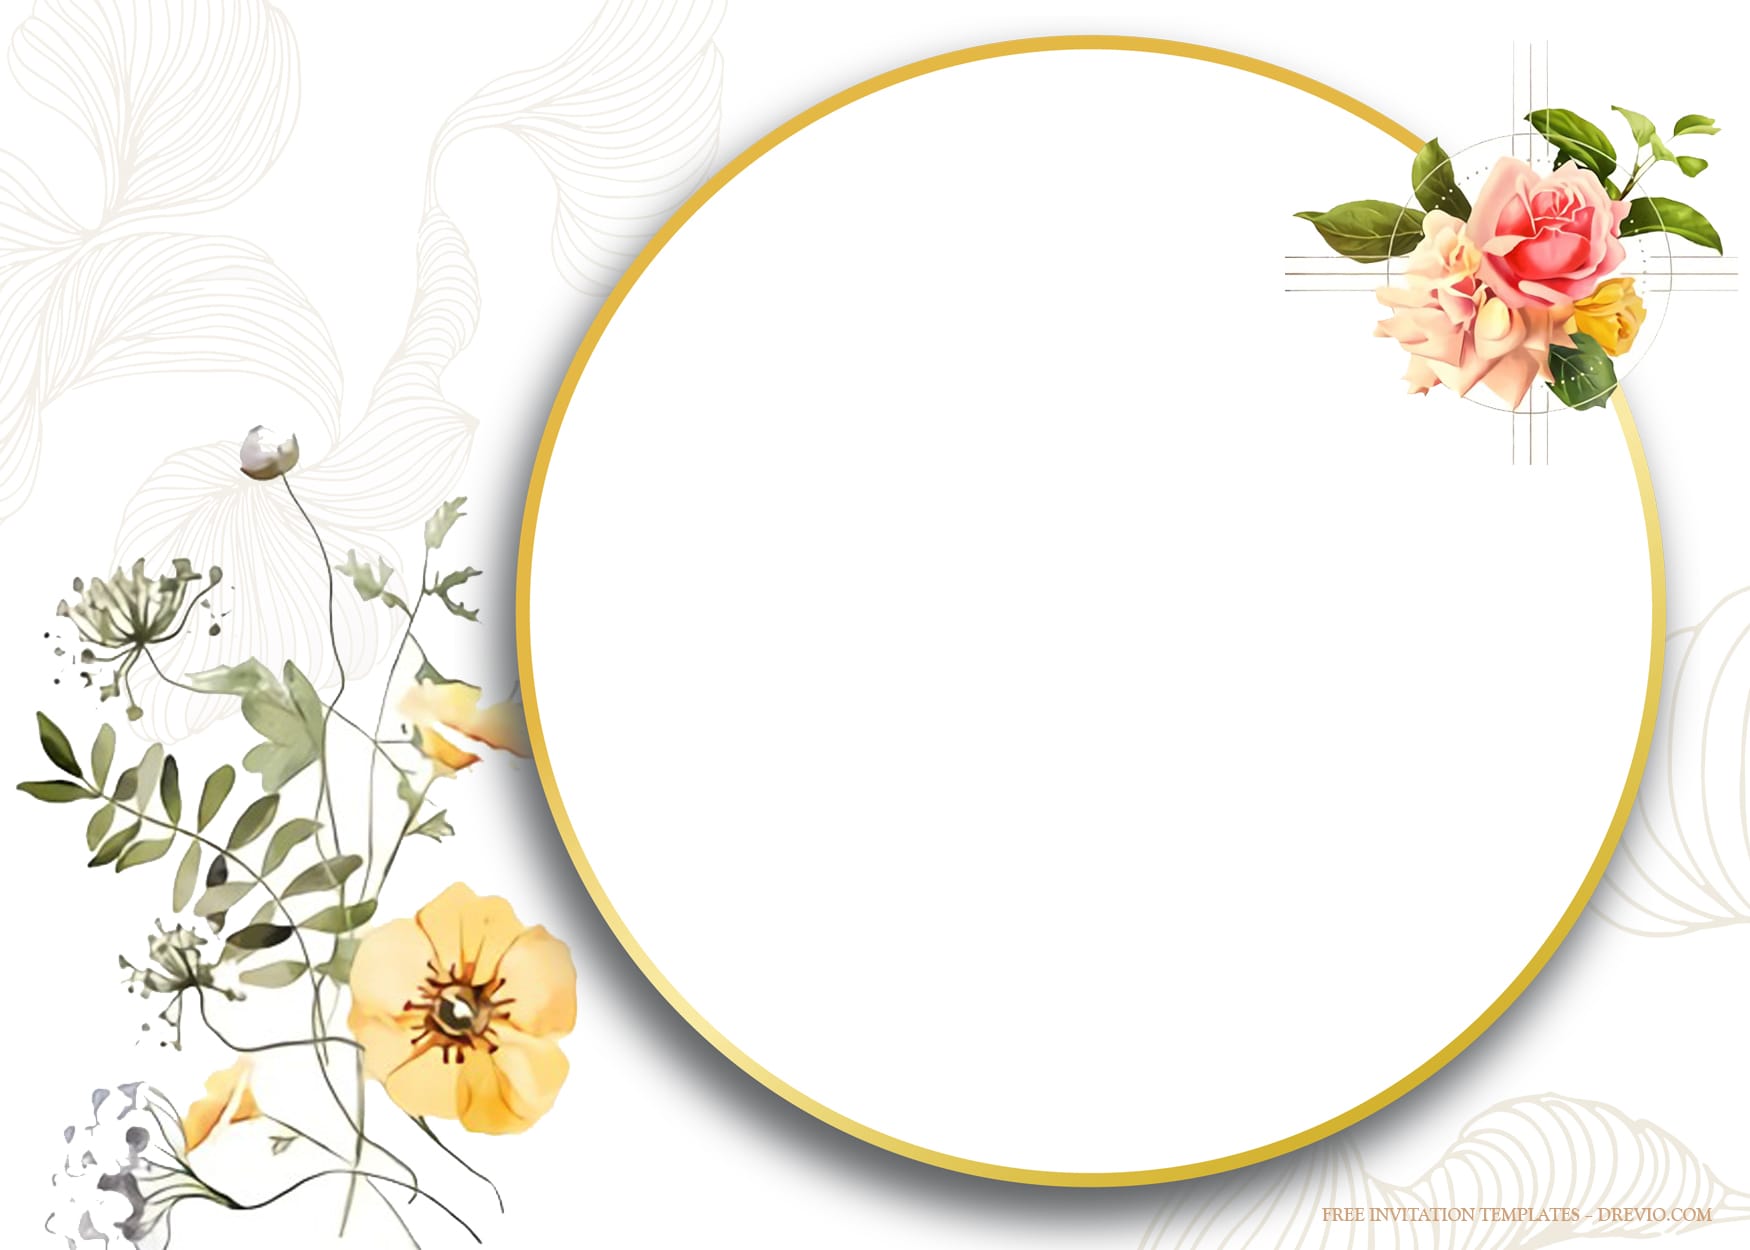 7+ Midsummer Wildflowers Garden Wedding Invitation Templates Type Five